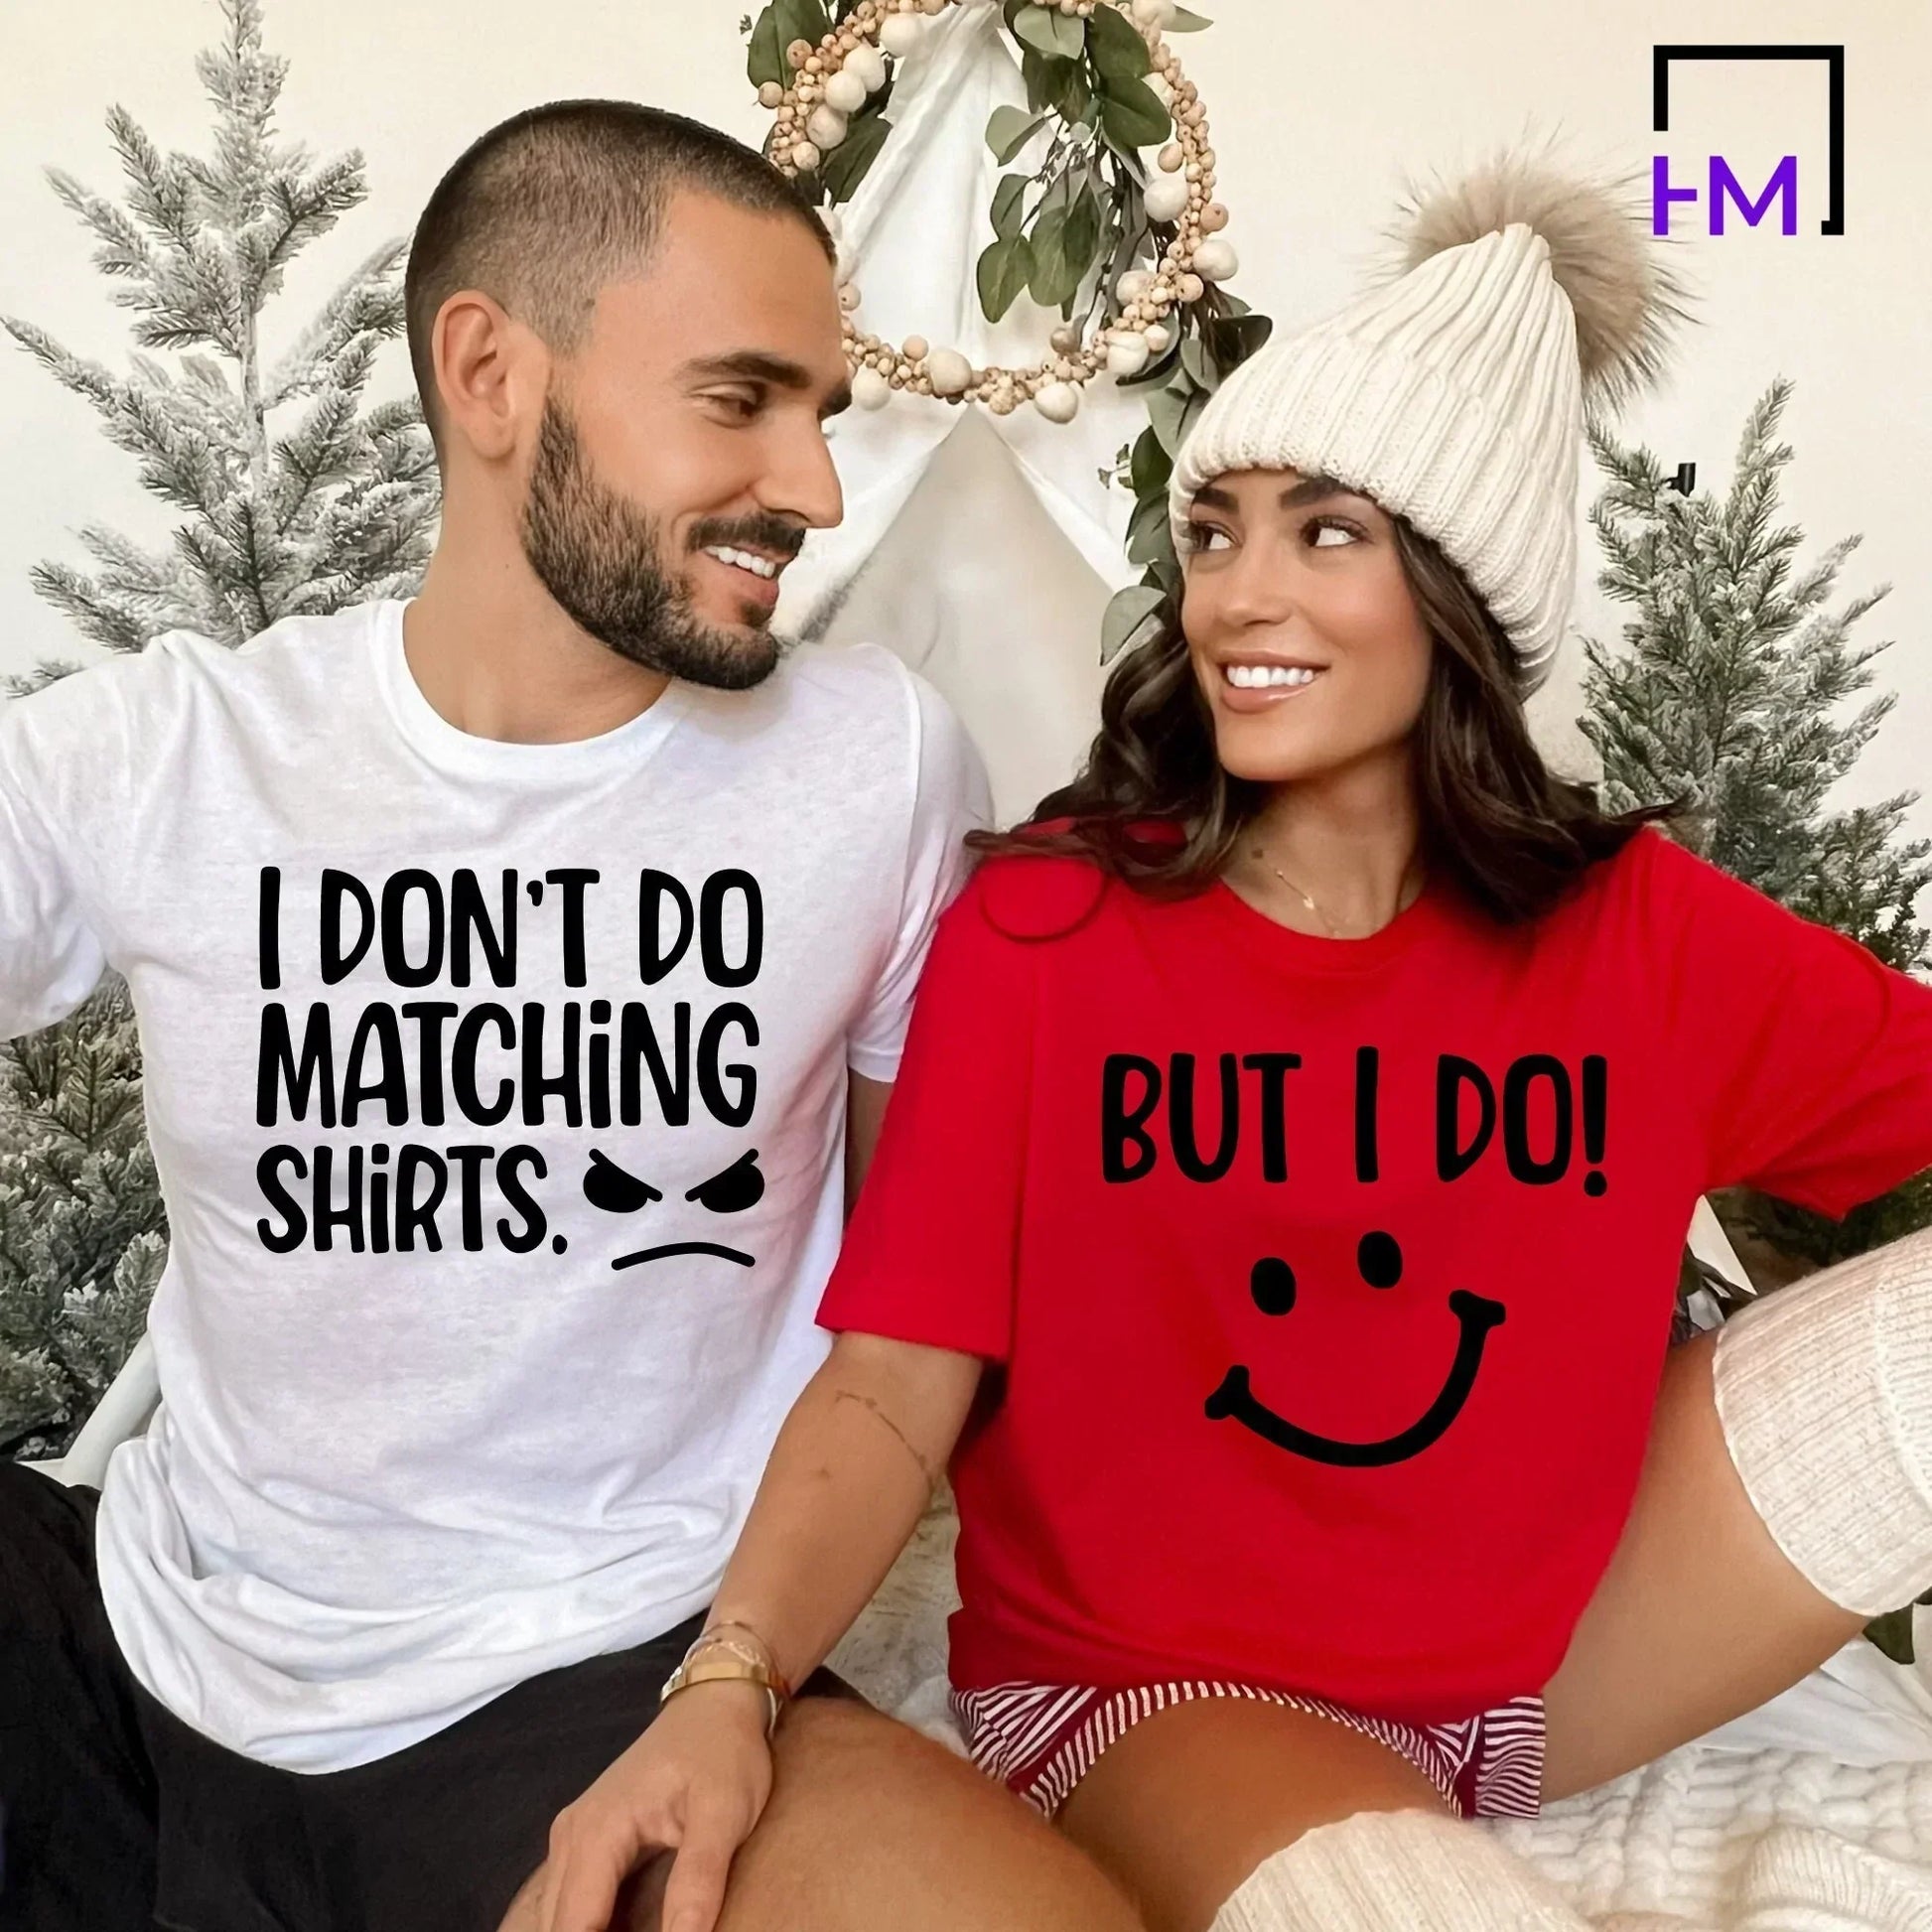 Funny couple shirts